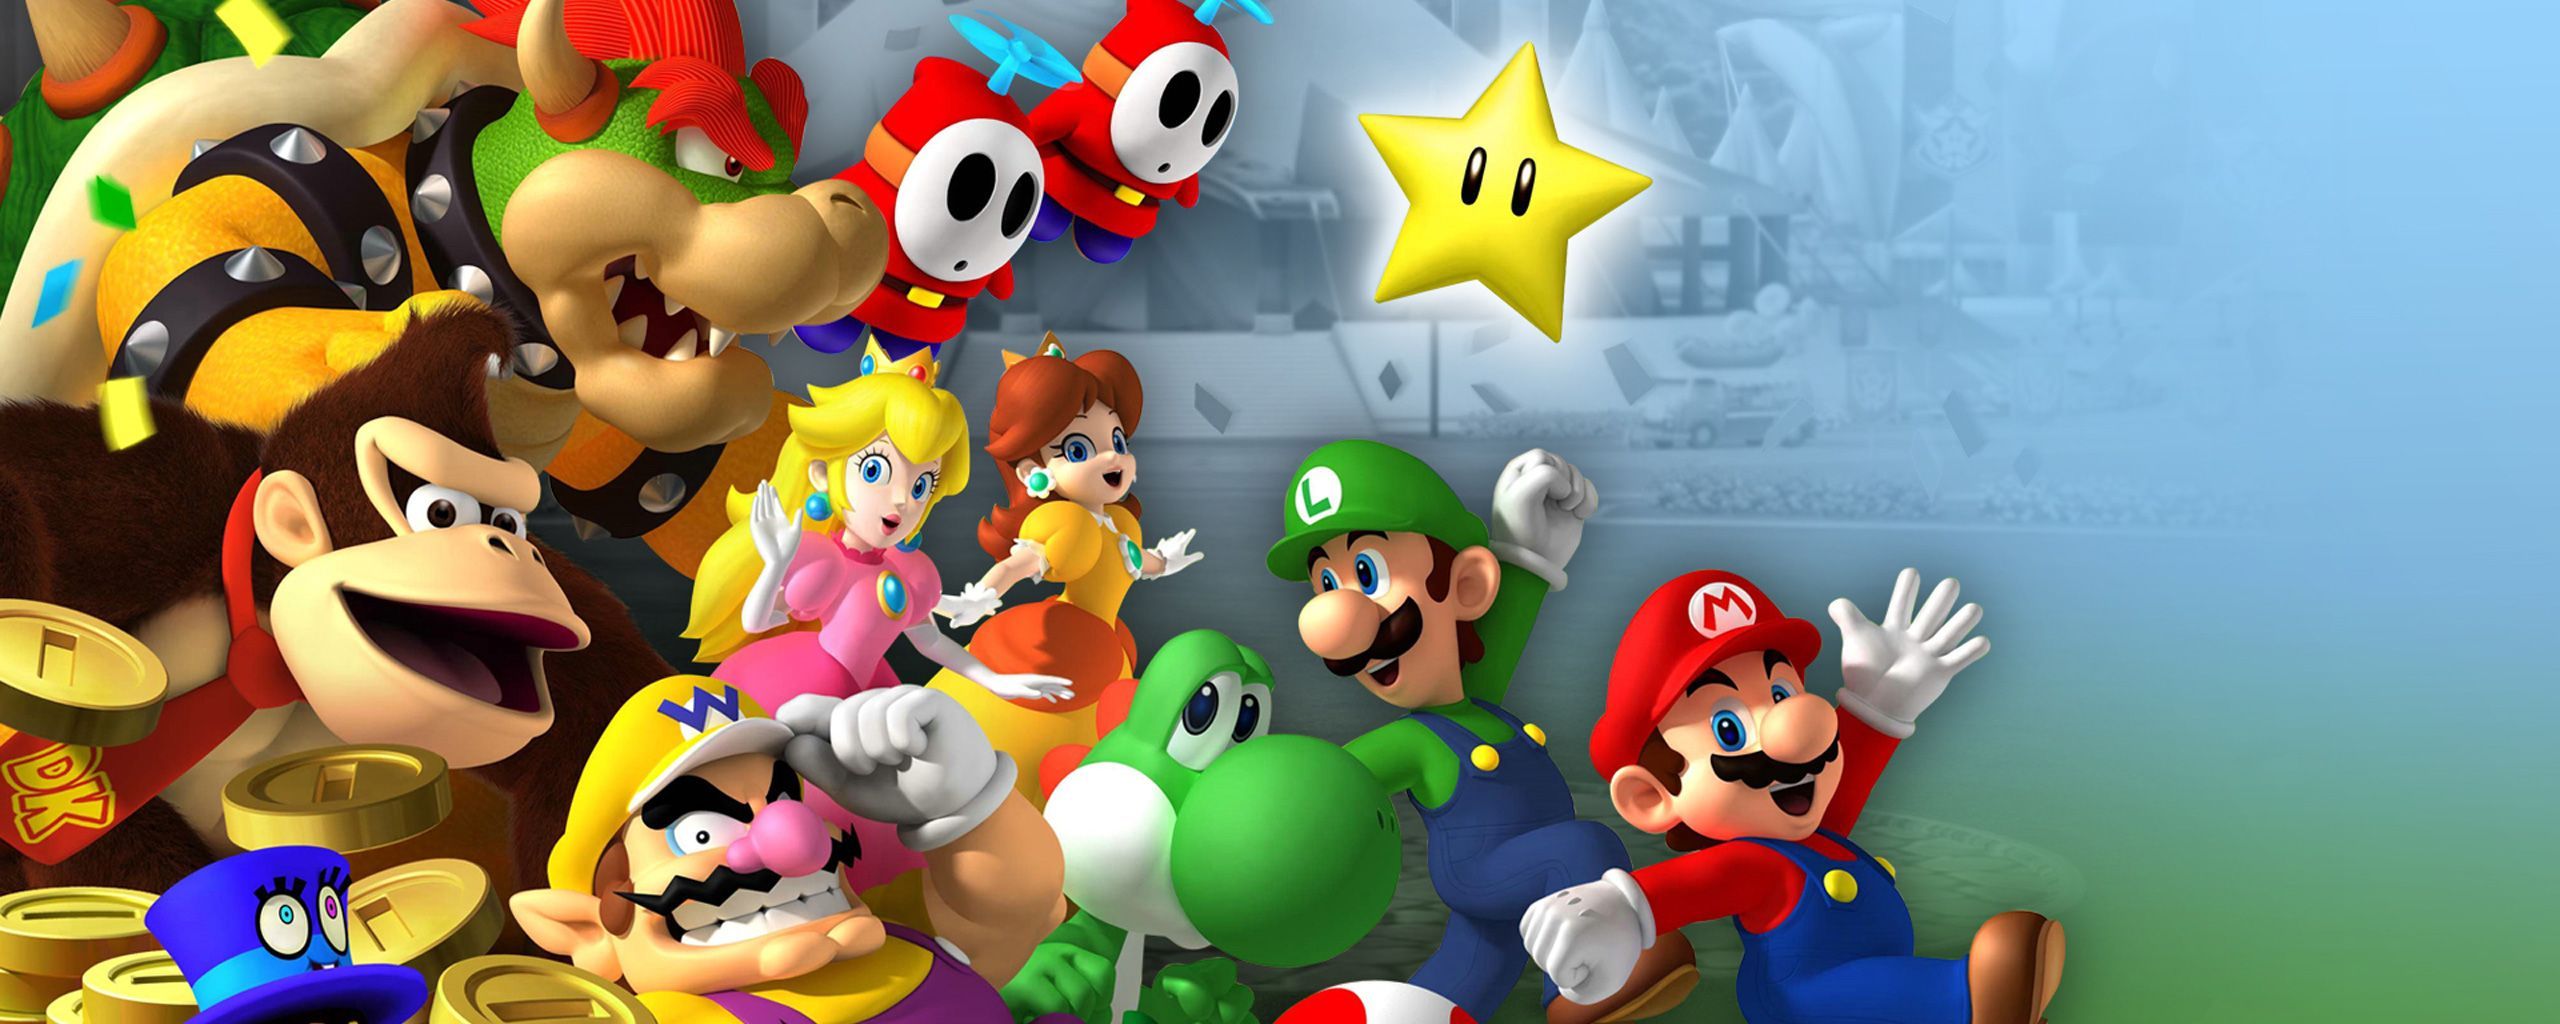 Super-Mario-Wallpaper-HD-Download.jpg